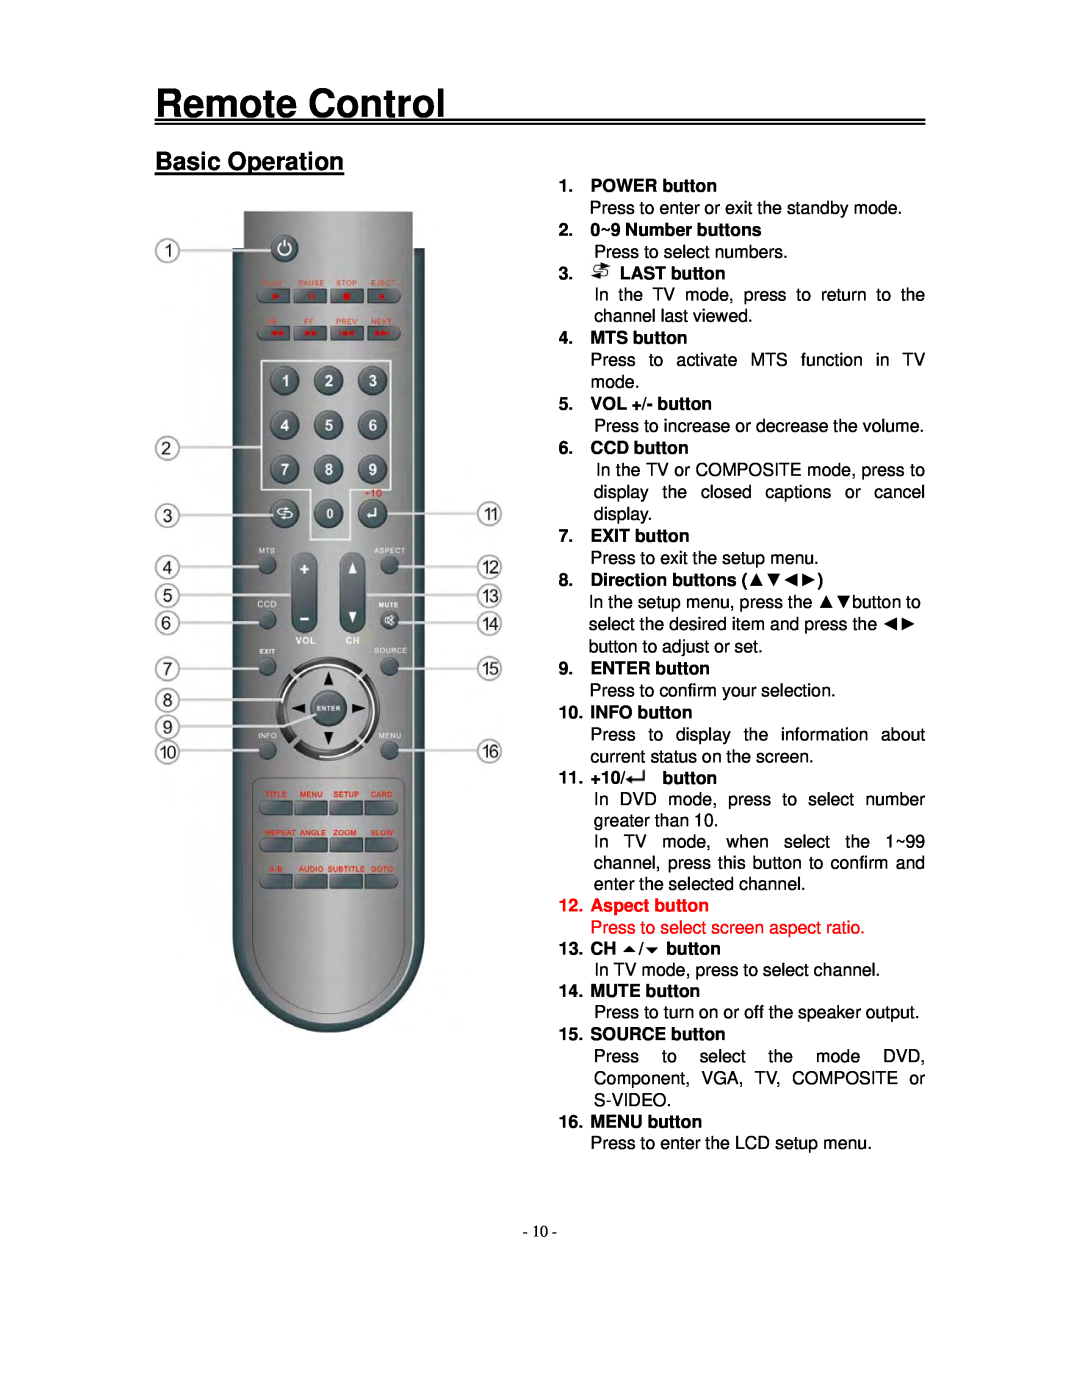 Polaroid FXM-1911C Basic Operation, Remote Control, POWER button, MTS button, VOL +/- button, CCD button, EXIT button 